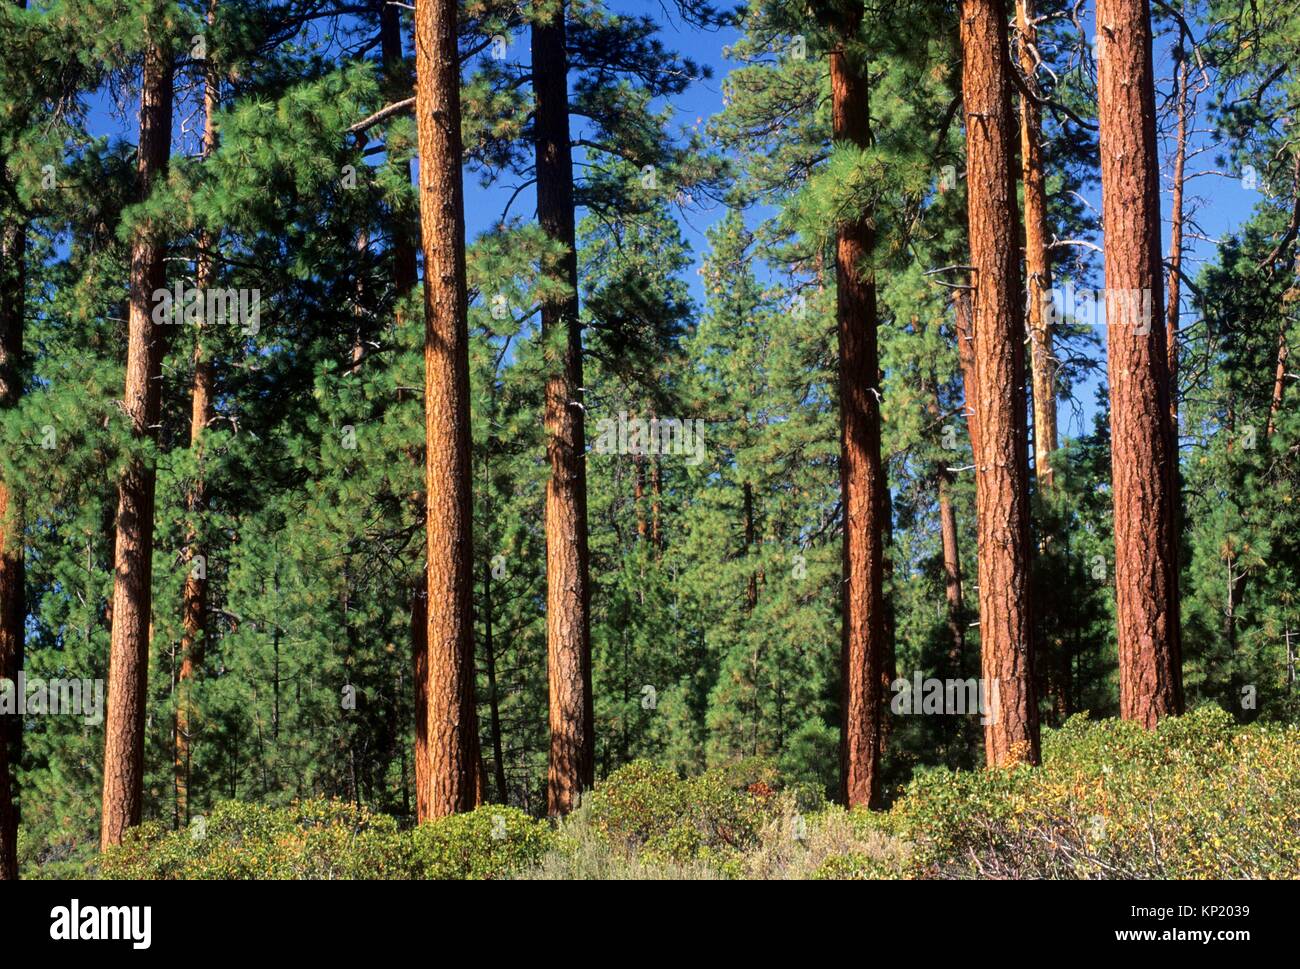 Ponderosa pine (Pinus ponderosa) forest near Camp Sherman, Deschutes National Forest, Oregon. Stock Photo